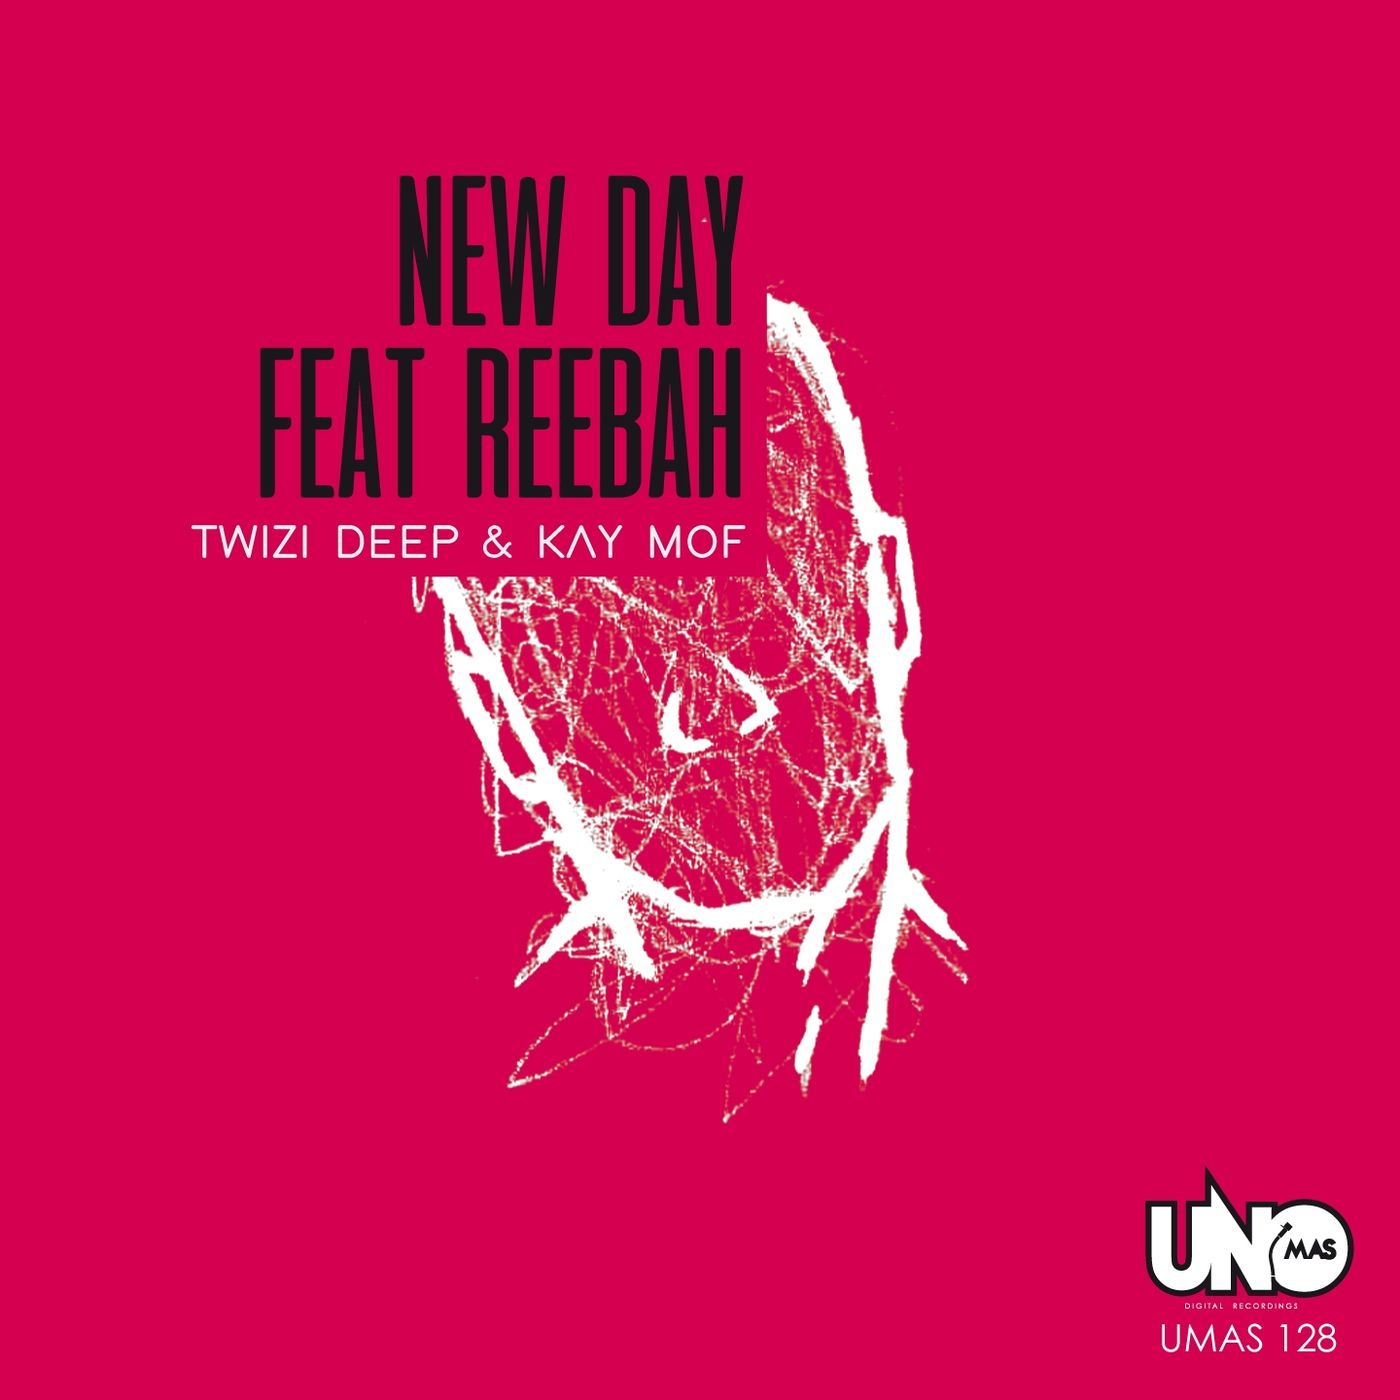 Twizi Deep & Kay Moof ft Reebah - New Day / Uno Mas digital recordings